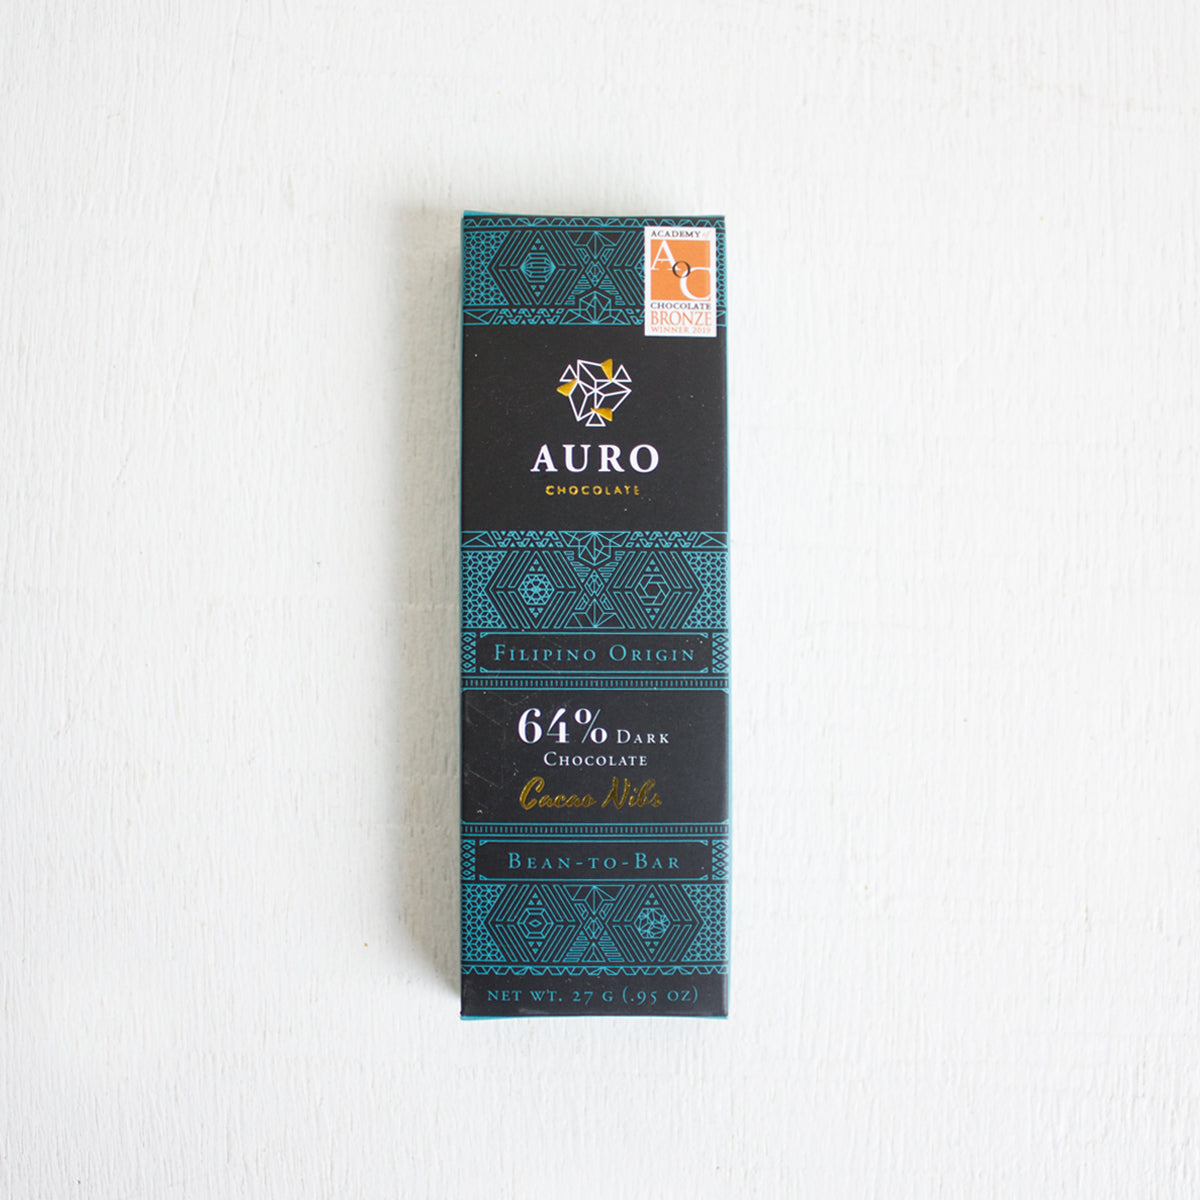 Auro Chocolate - Auro Heritage Collection Gift Set